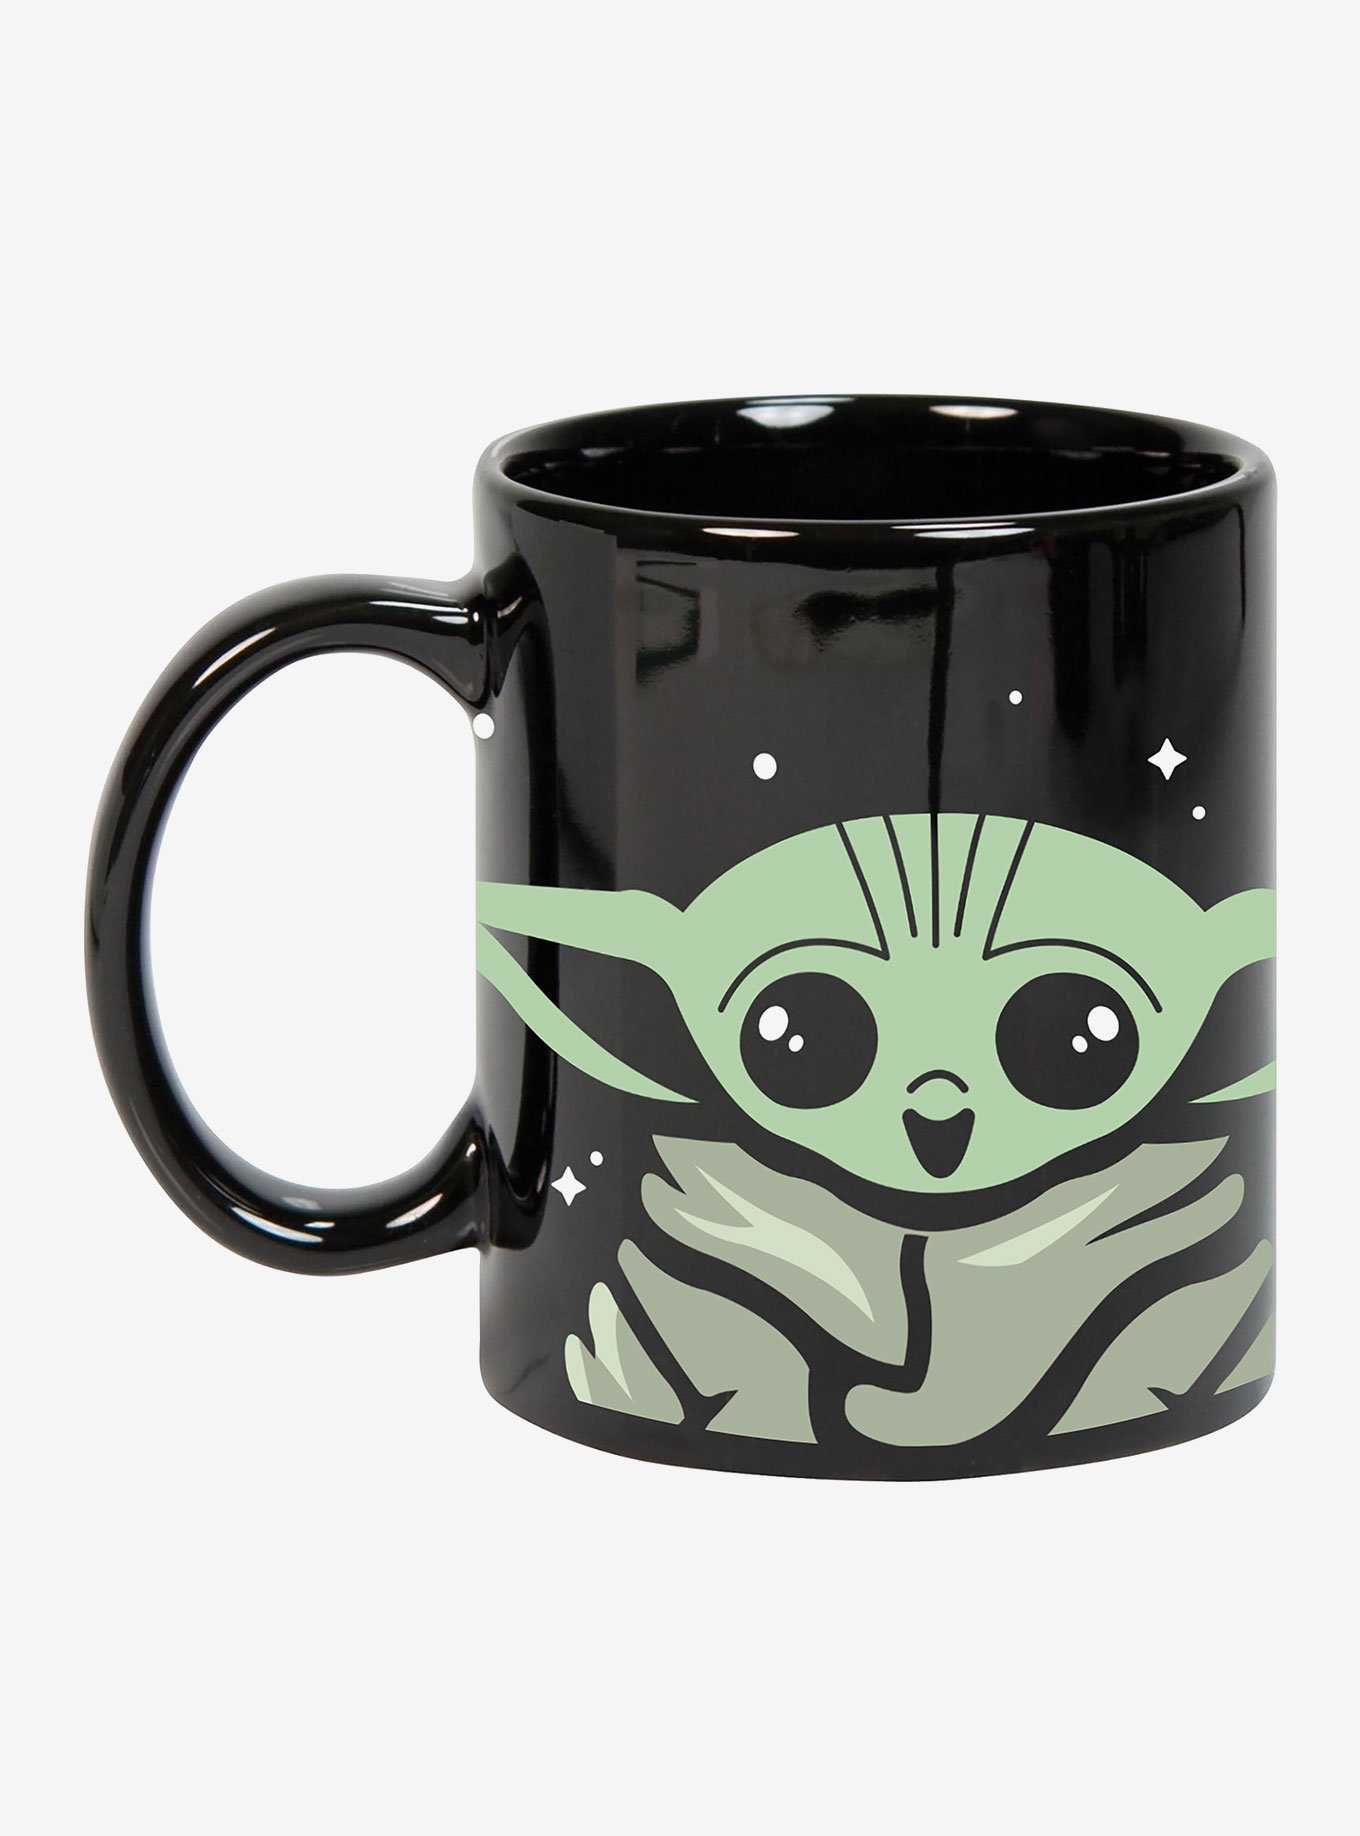 Star Wars The Mandalorian Single Cup Coffee Maker with Mug, , hi-res